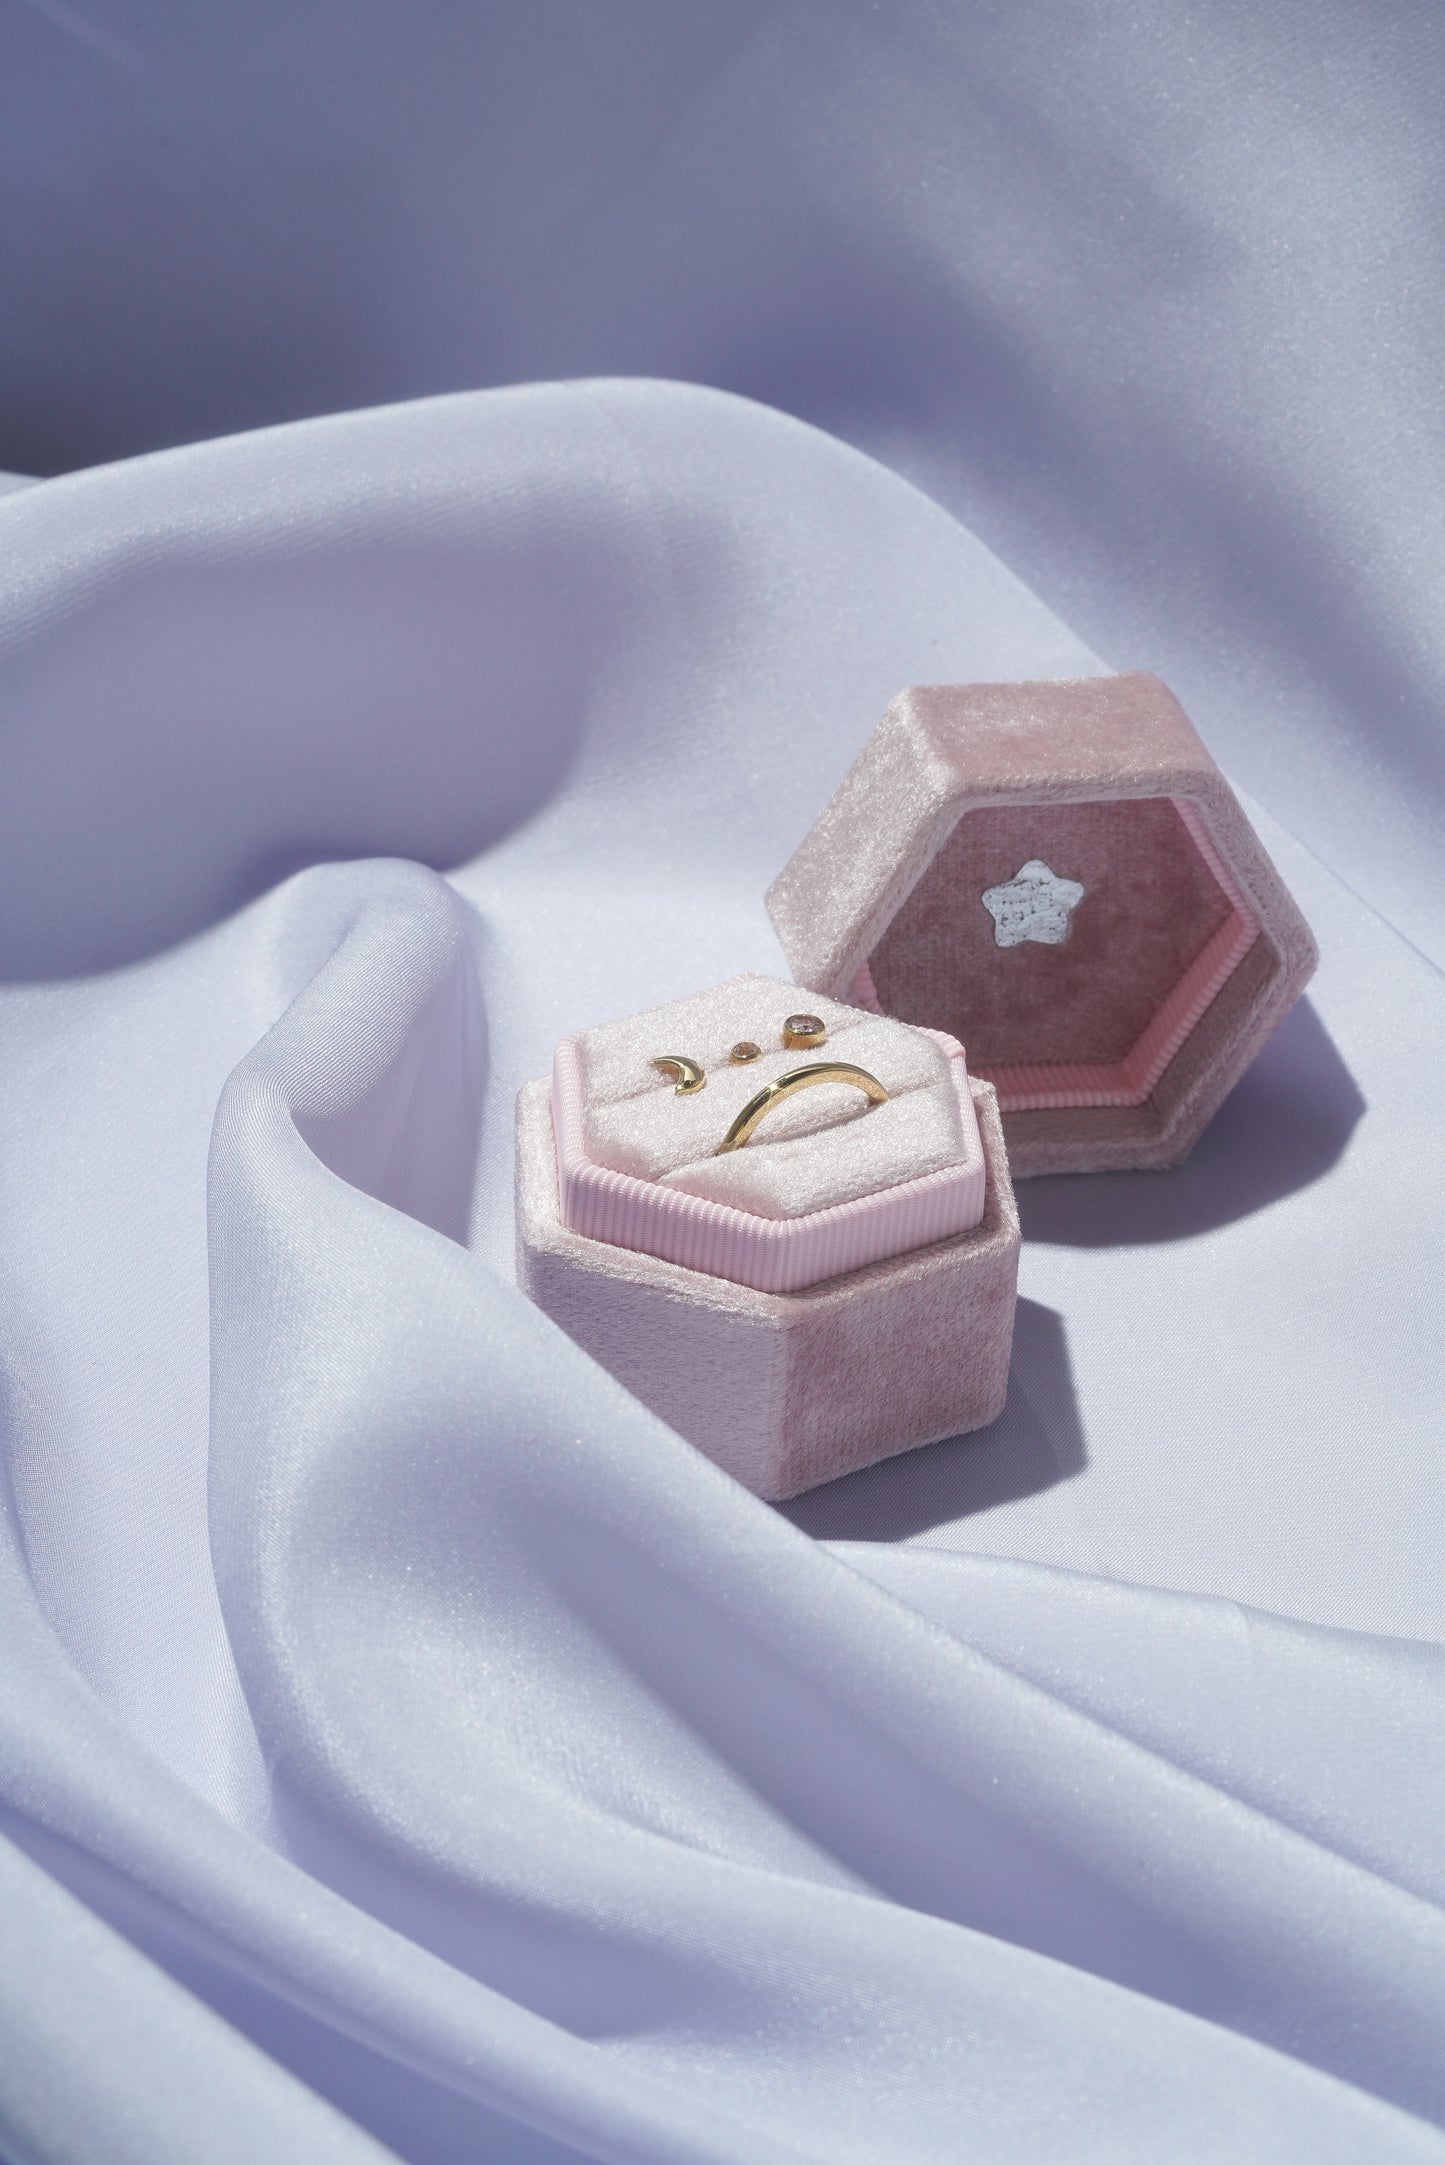 Rose Hexagon Jewelry Box - Double Ring